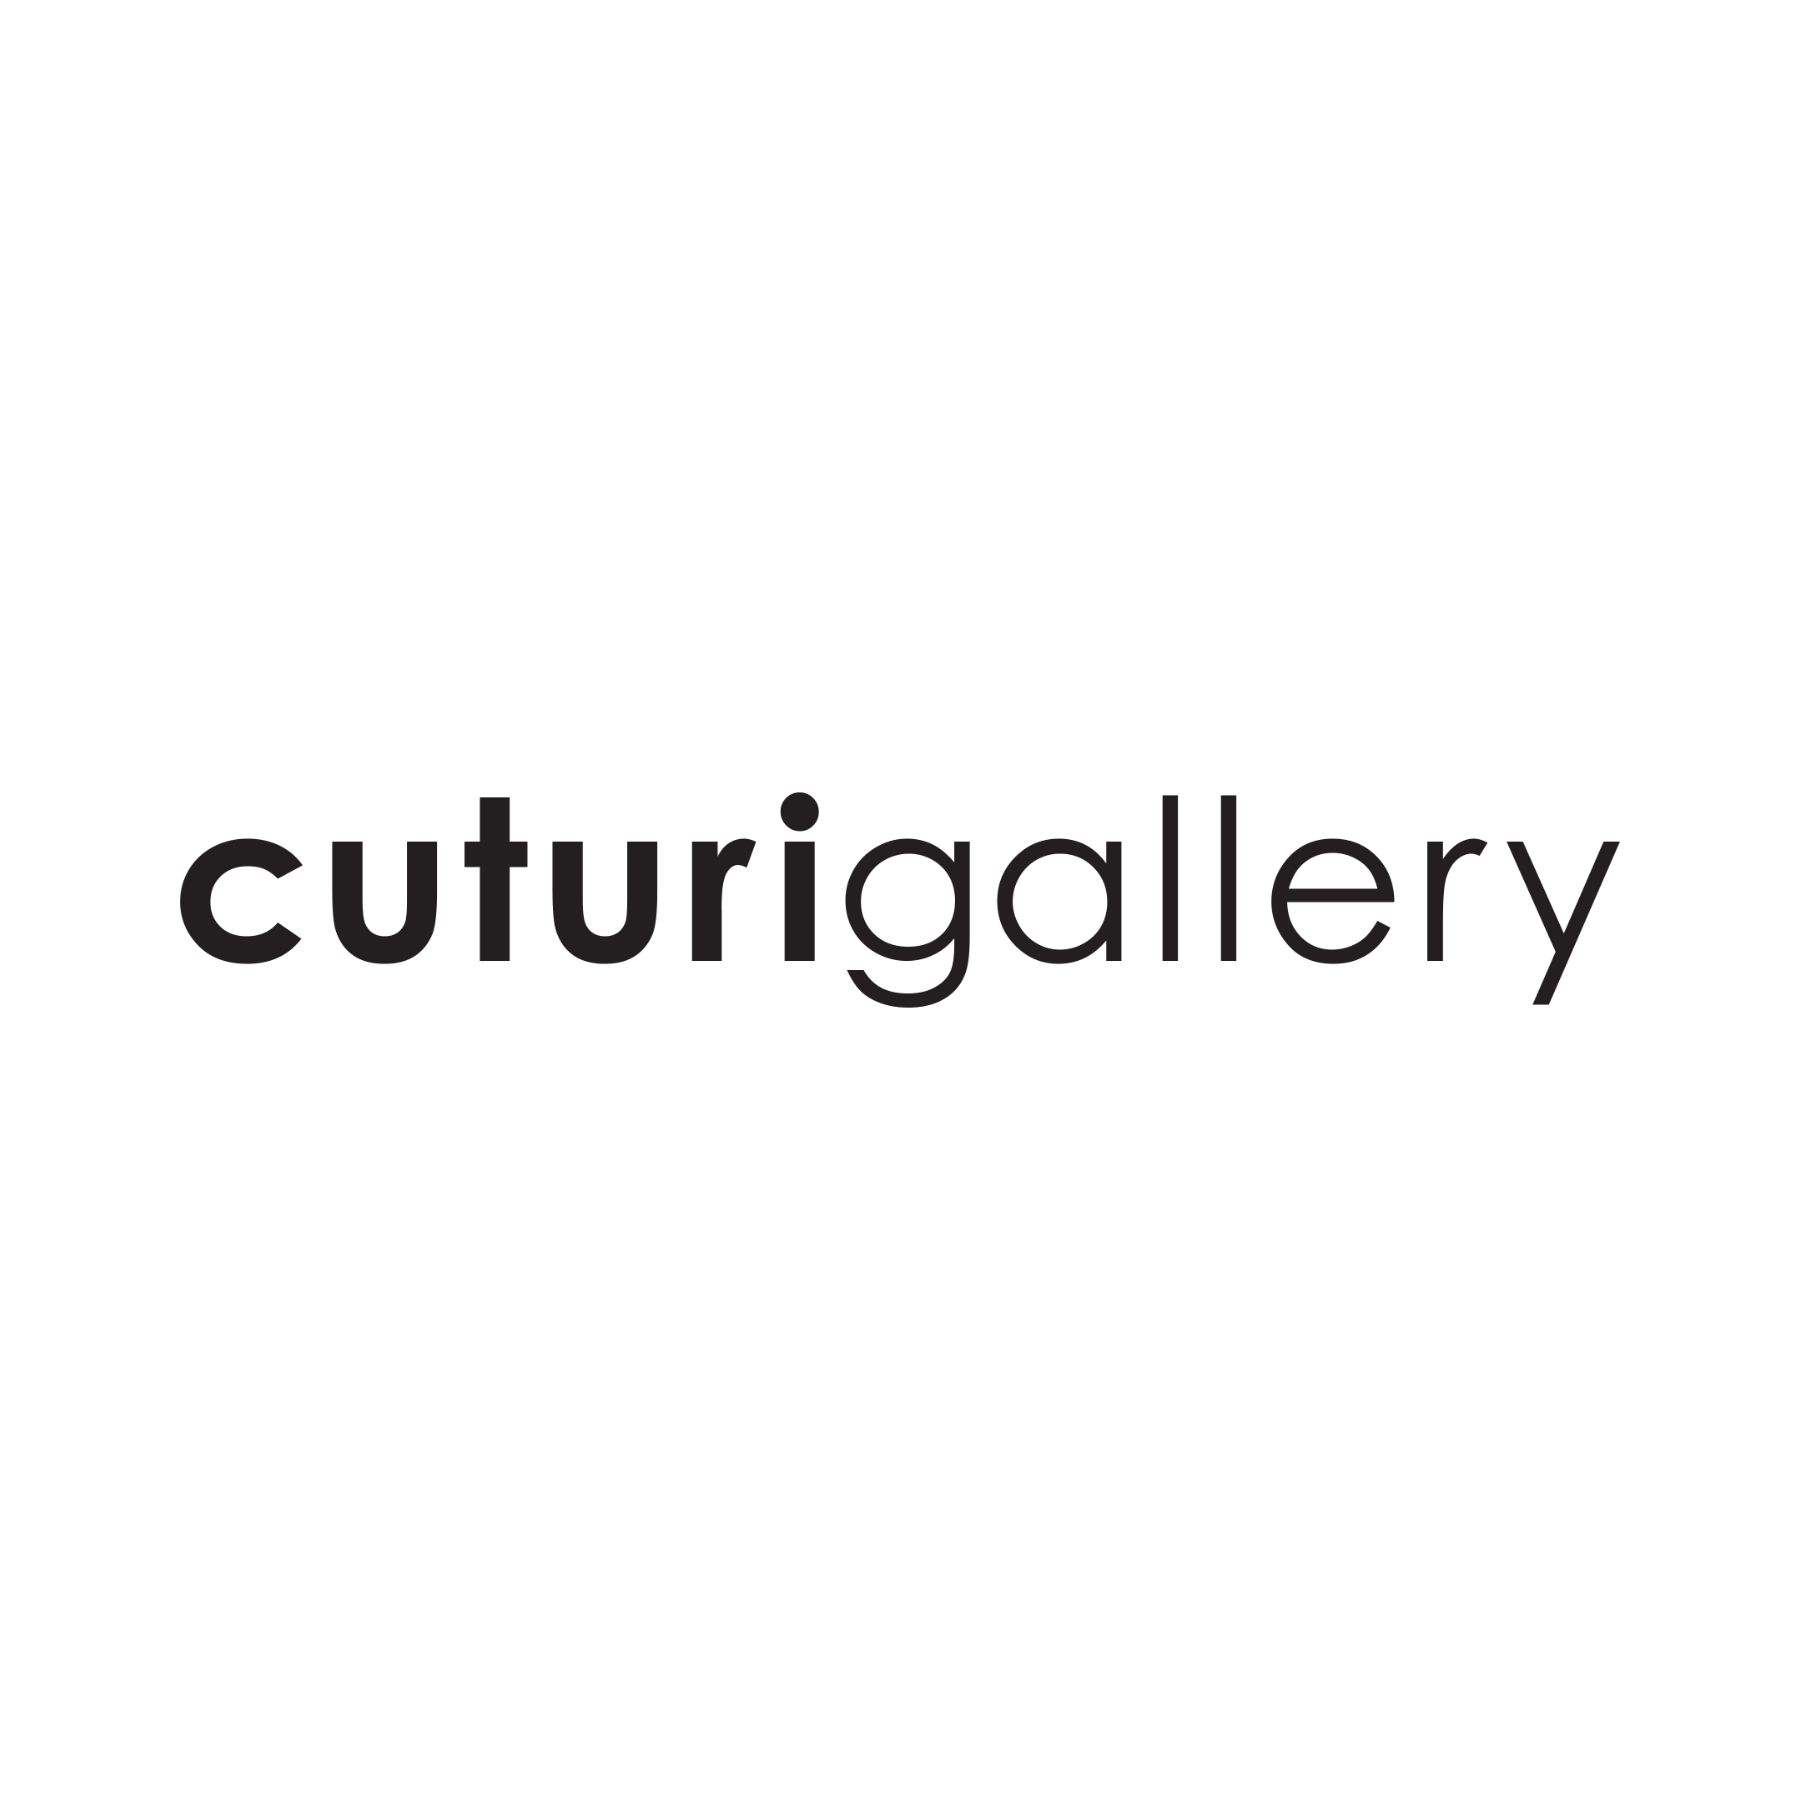 Cuturi Gallery